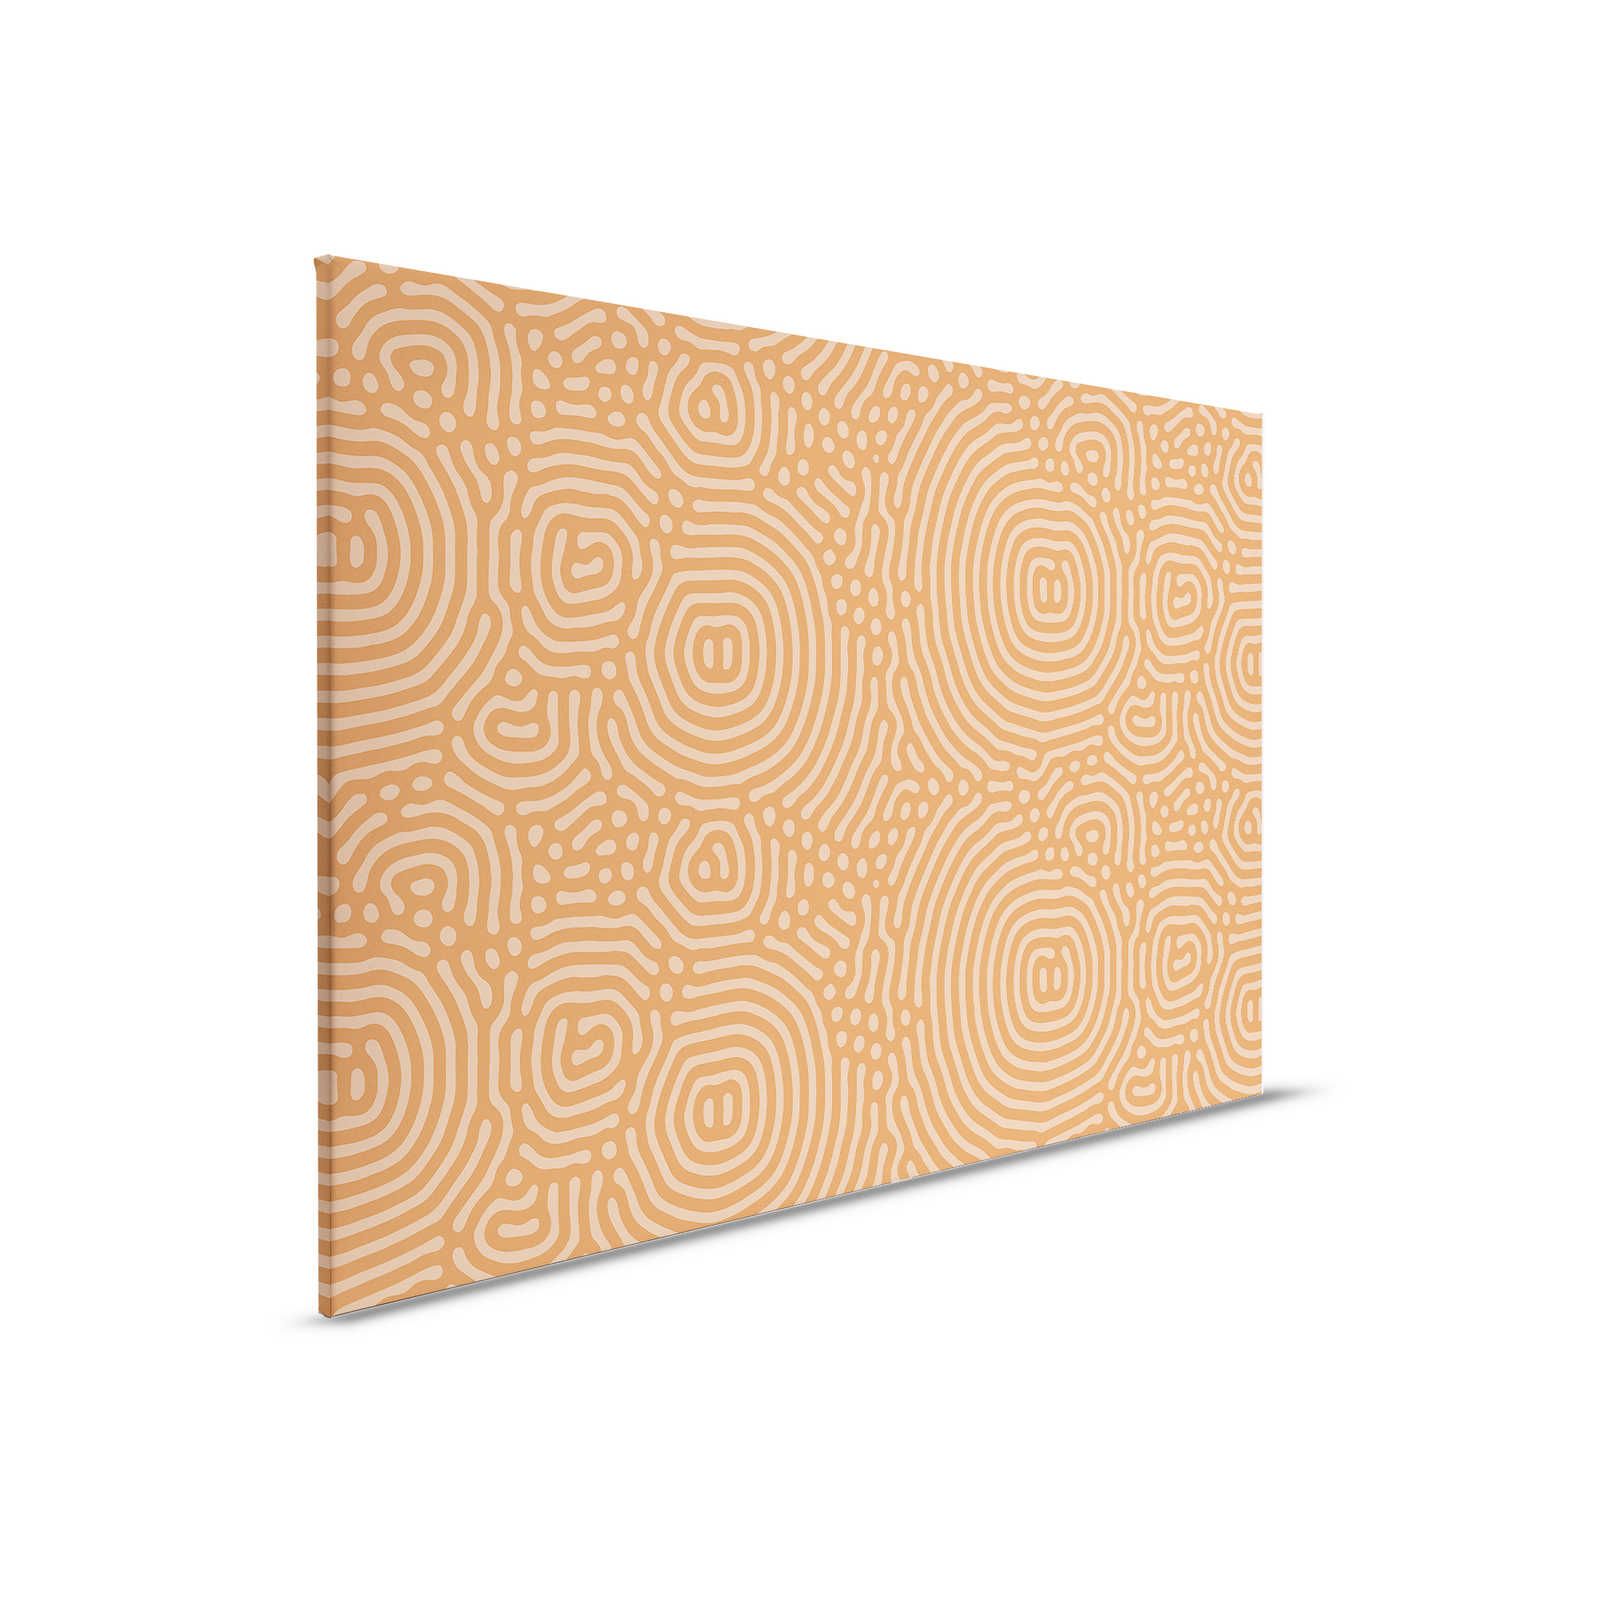         Sahel 2 - Orange Canvas painting Labyrinth Pattern Terracotta - 0.90 m x 0.60 m
    